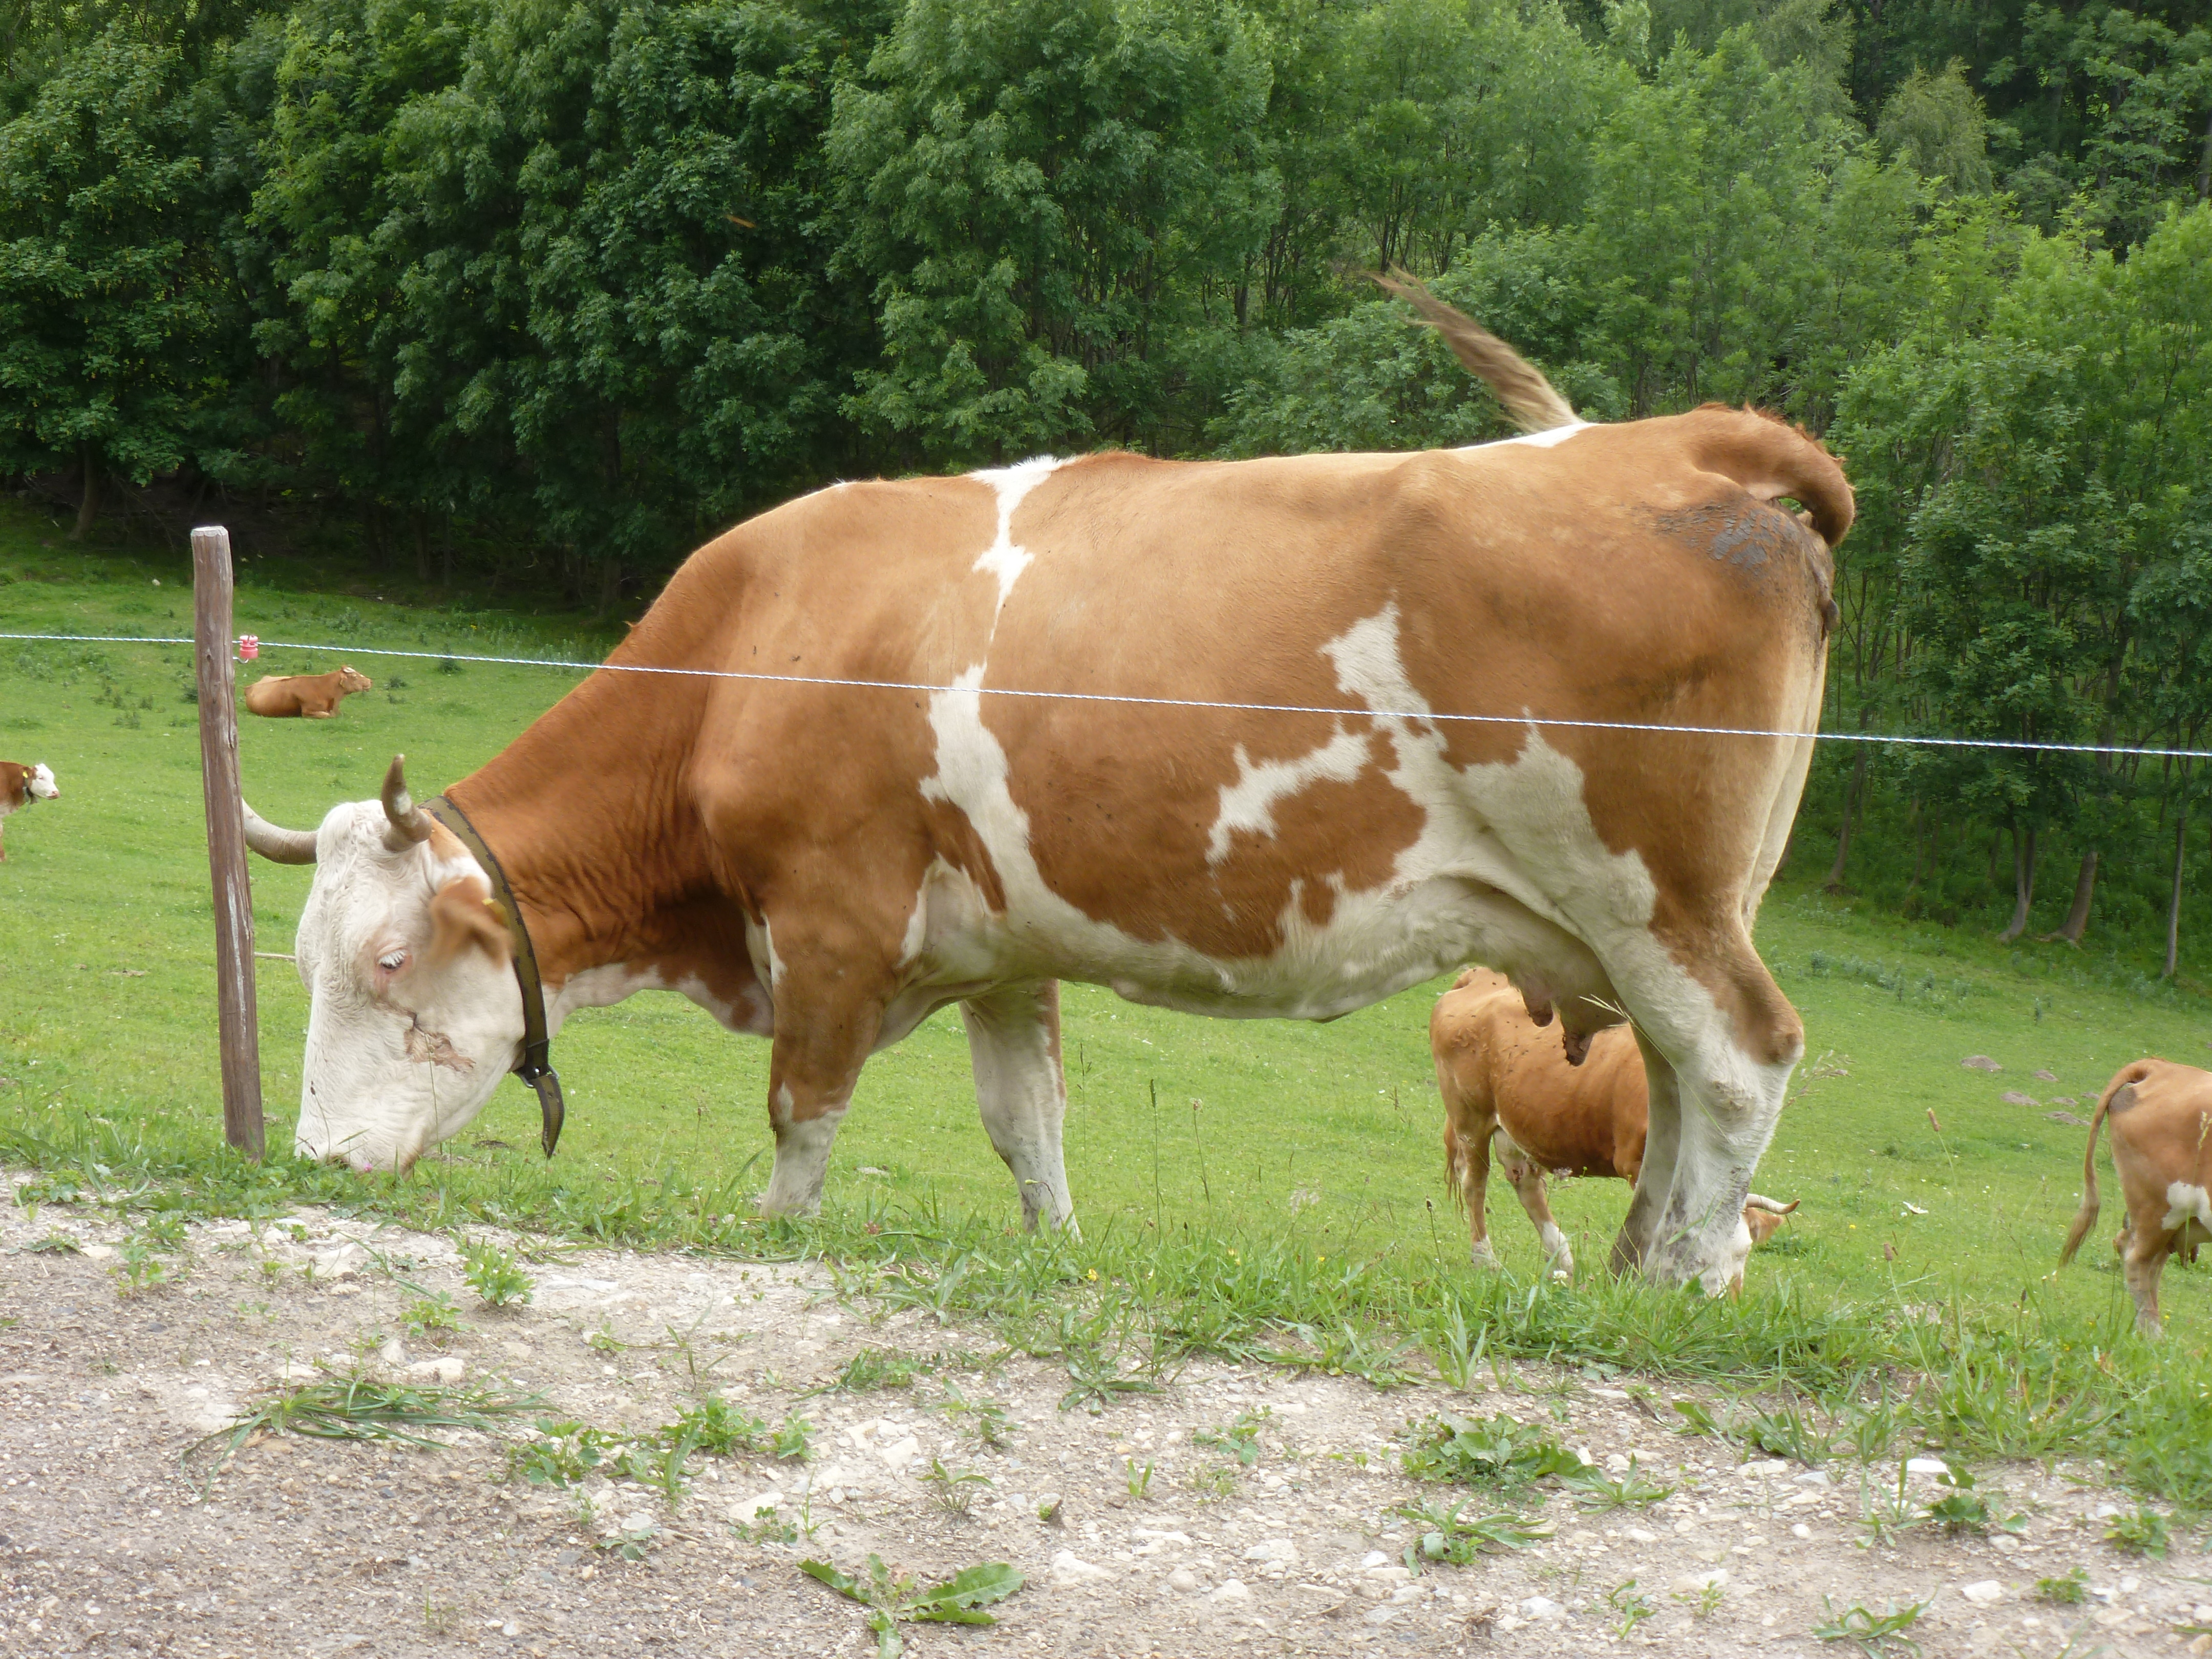 A dairy cow near Semmering, Austria